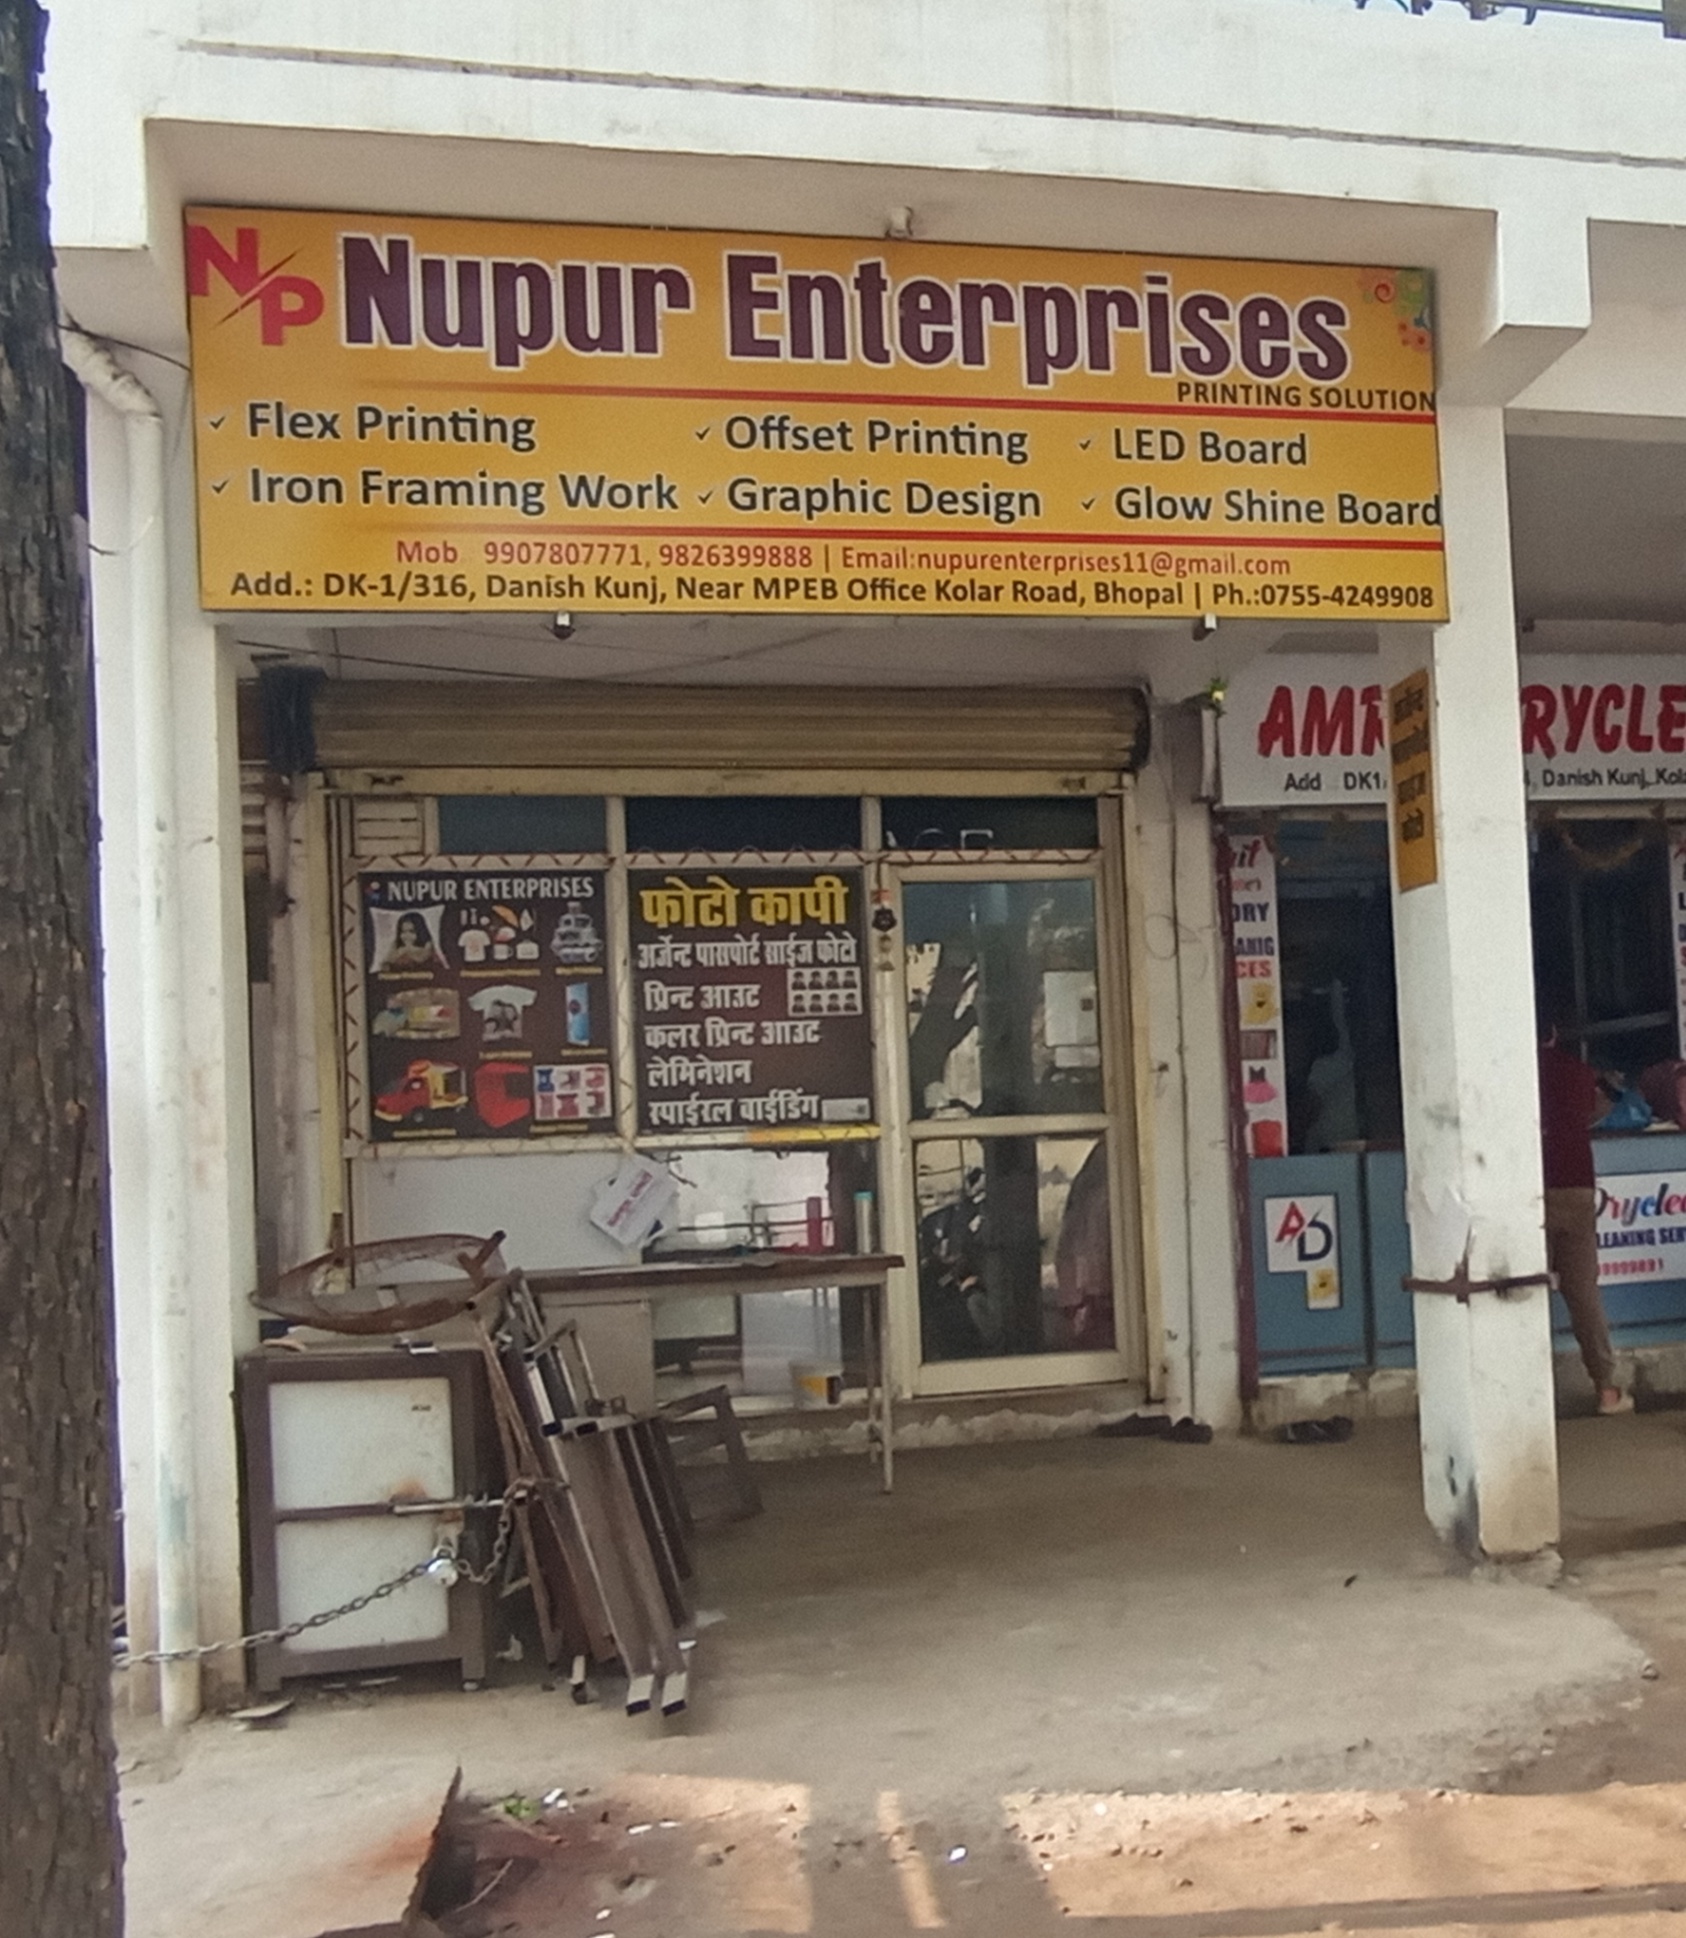 Nupur Enterprises, Danish Kunj